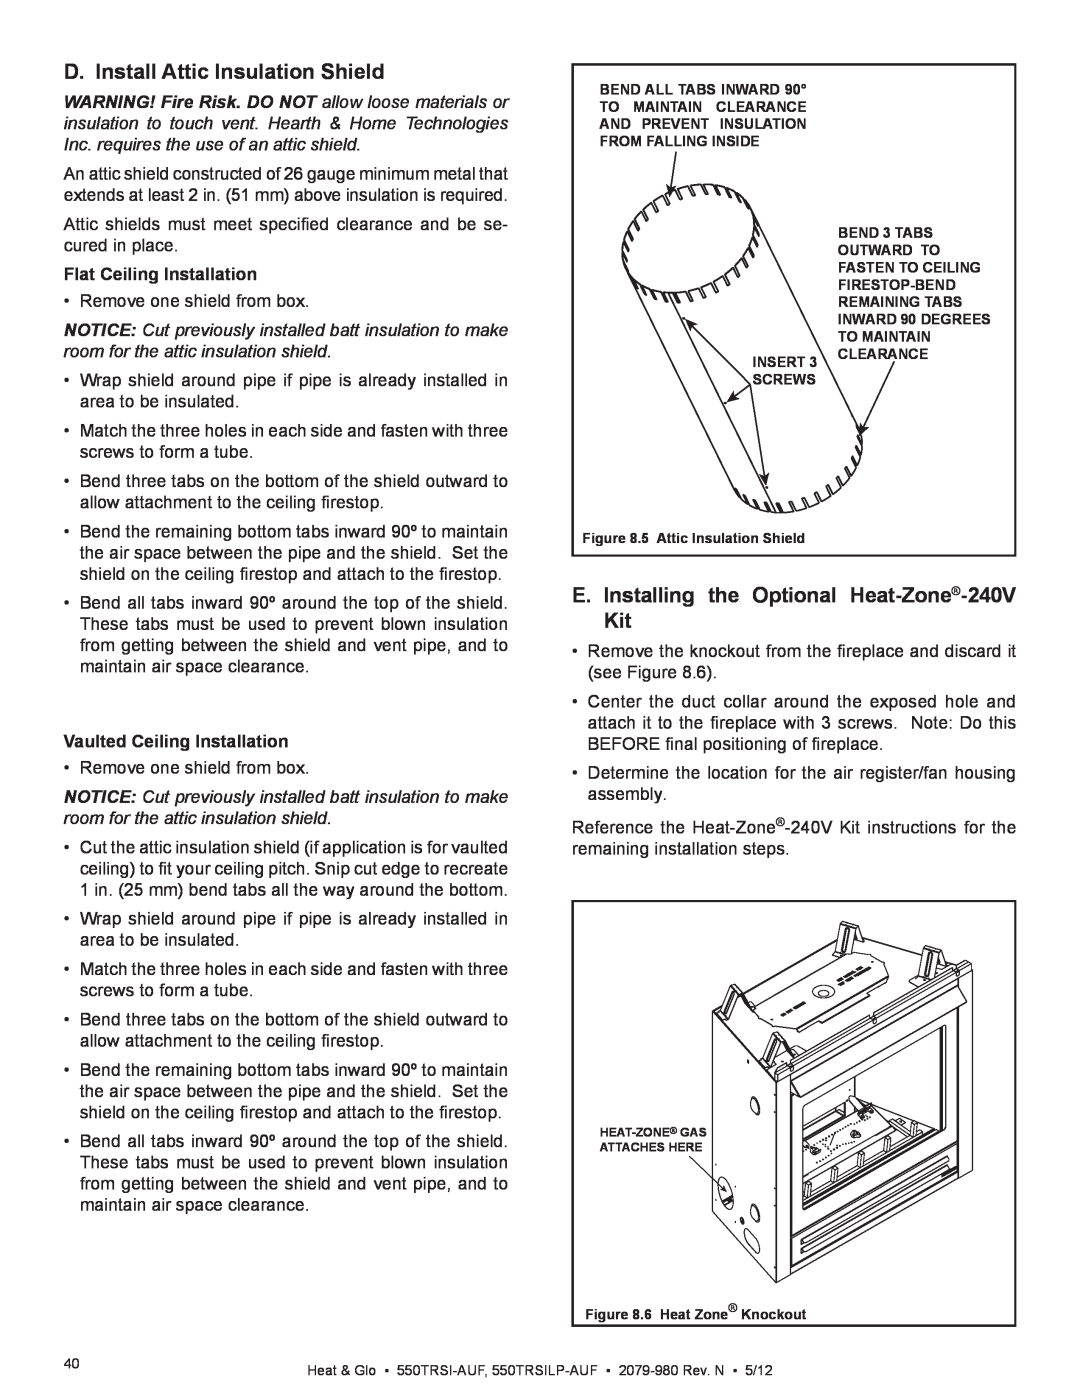 Heat & Glo LifeStyle 550TRSI-AUF D. Install Attic Insulation Shield, E. Installing the Optional Heat-Zone-240V Kit 